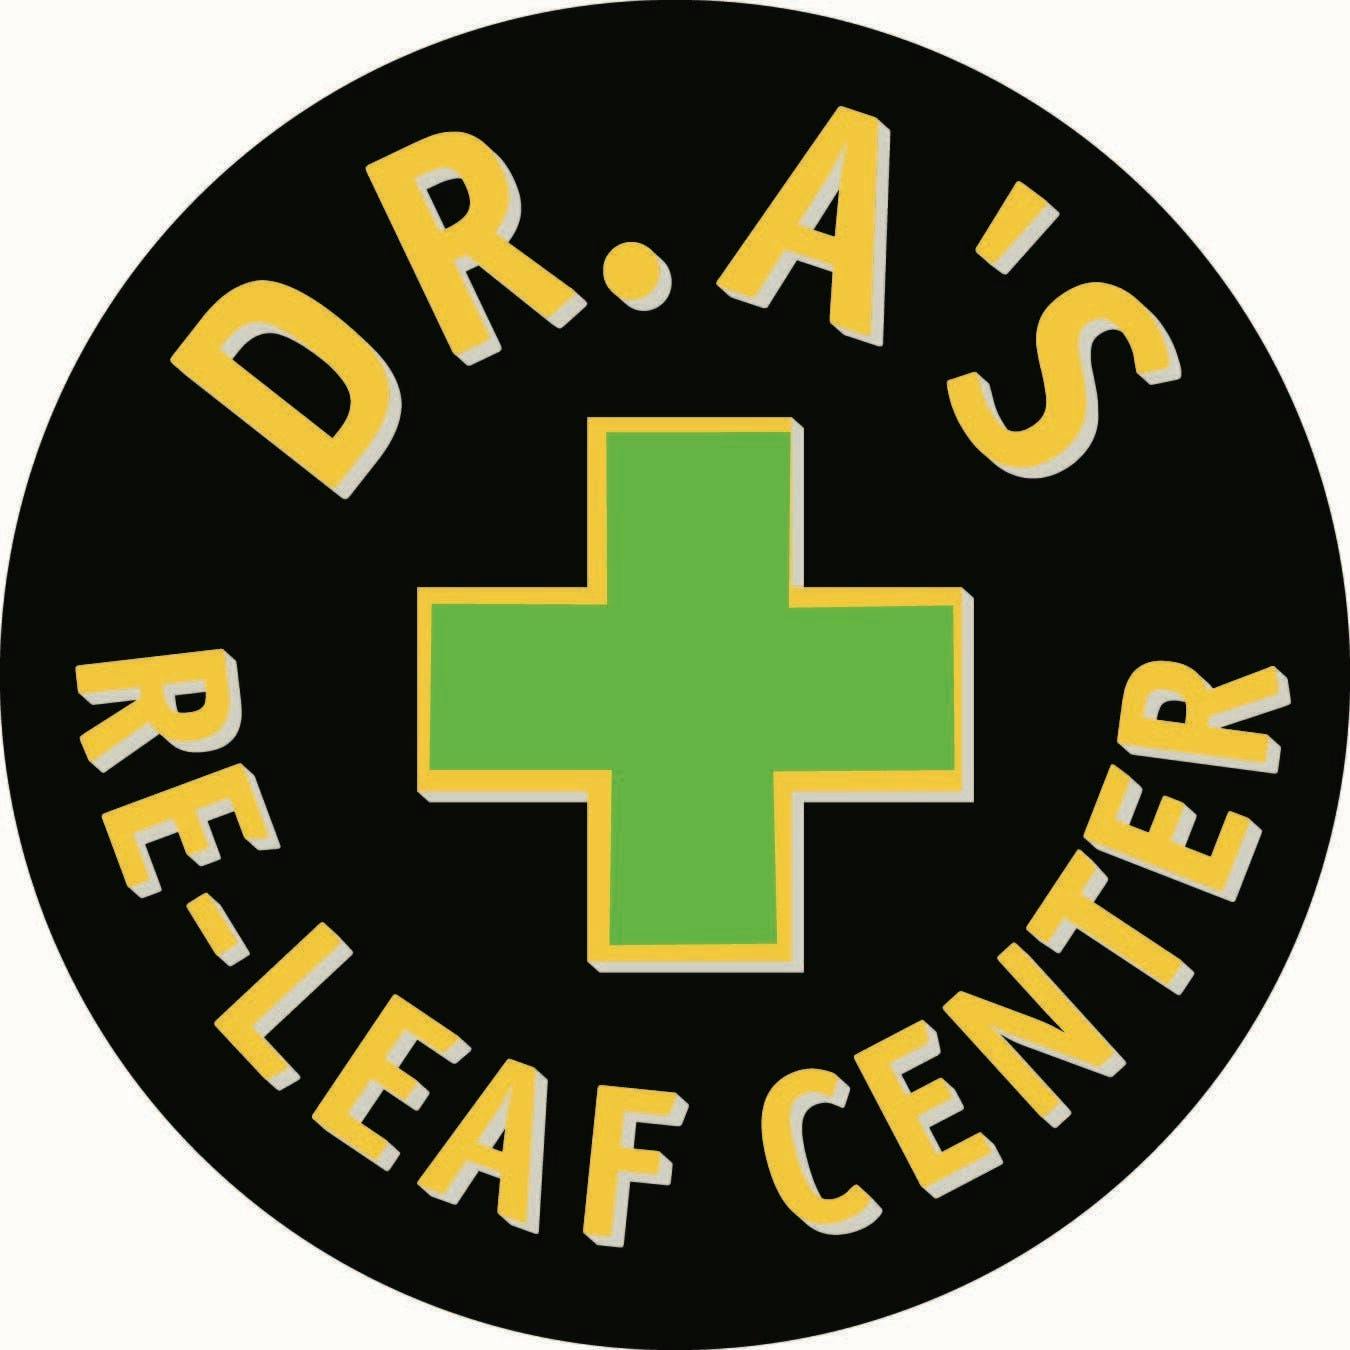 Dr. A's Re-Leaf Center